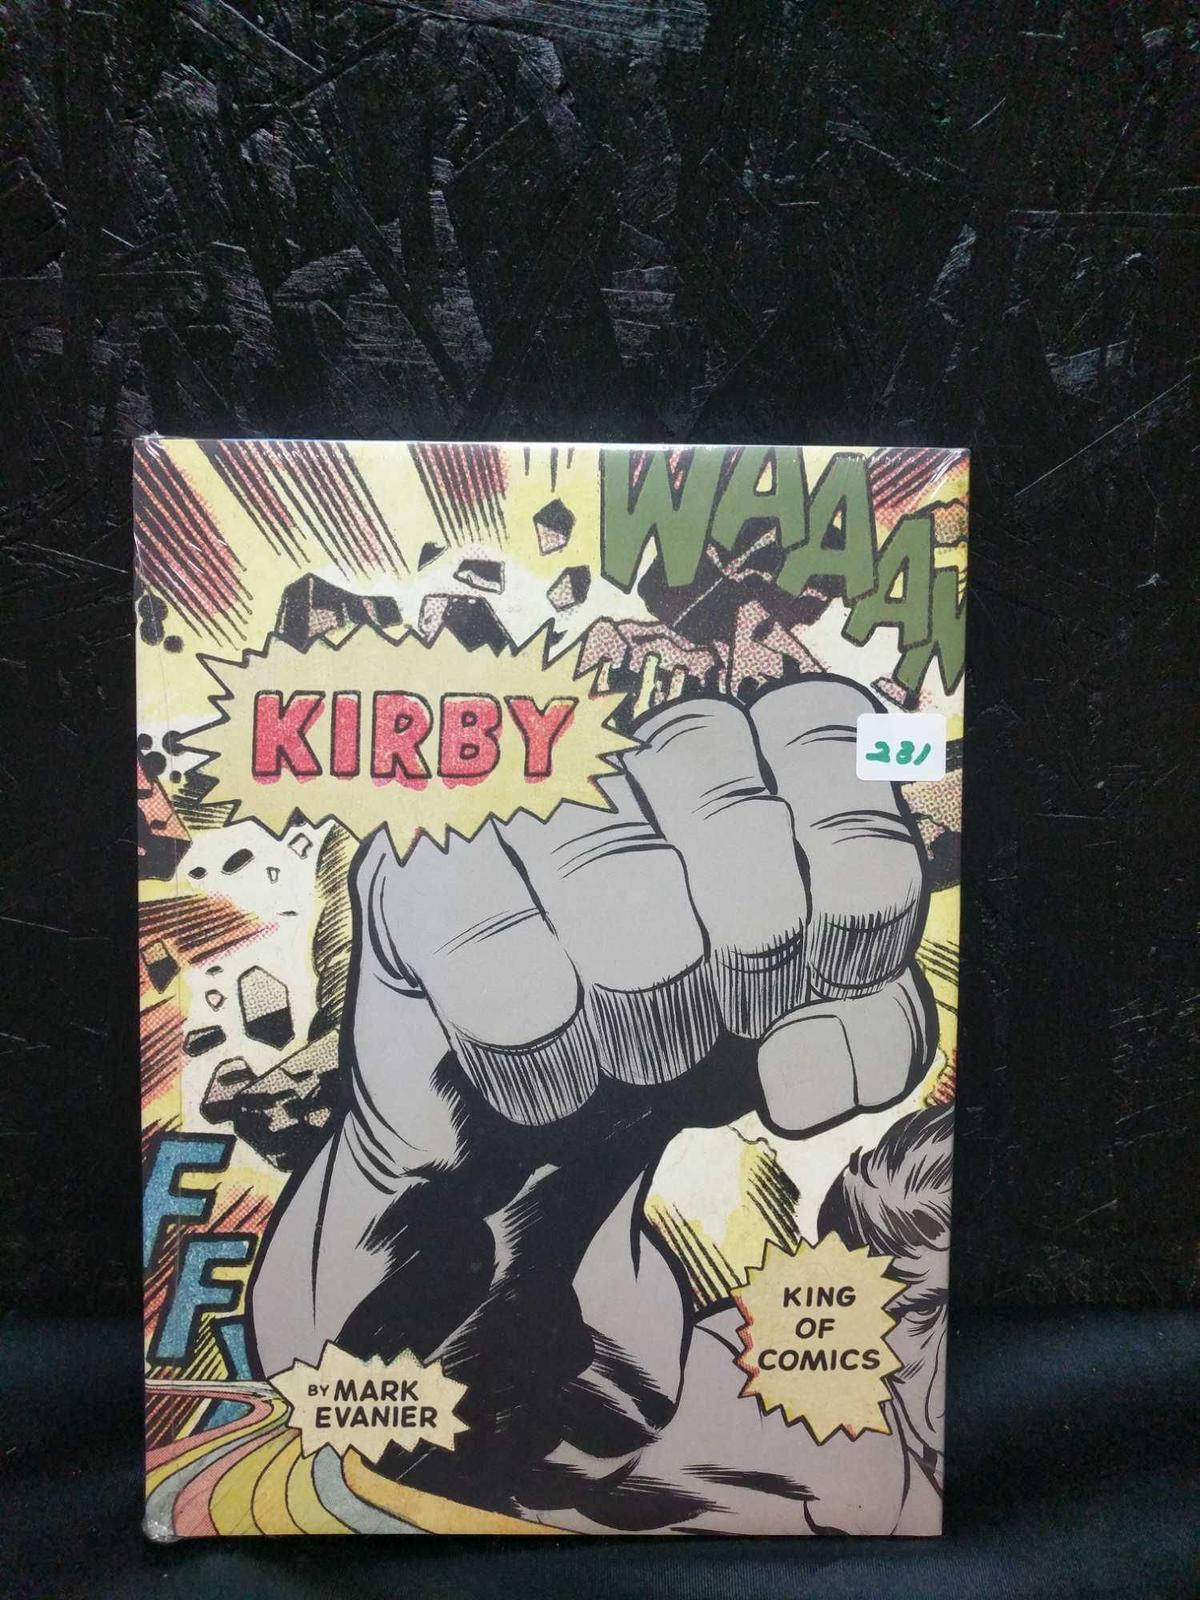 Kirby king of comics hardback book - by Mark evanier